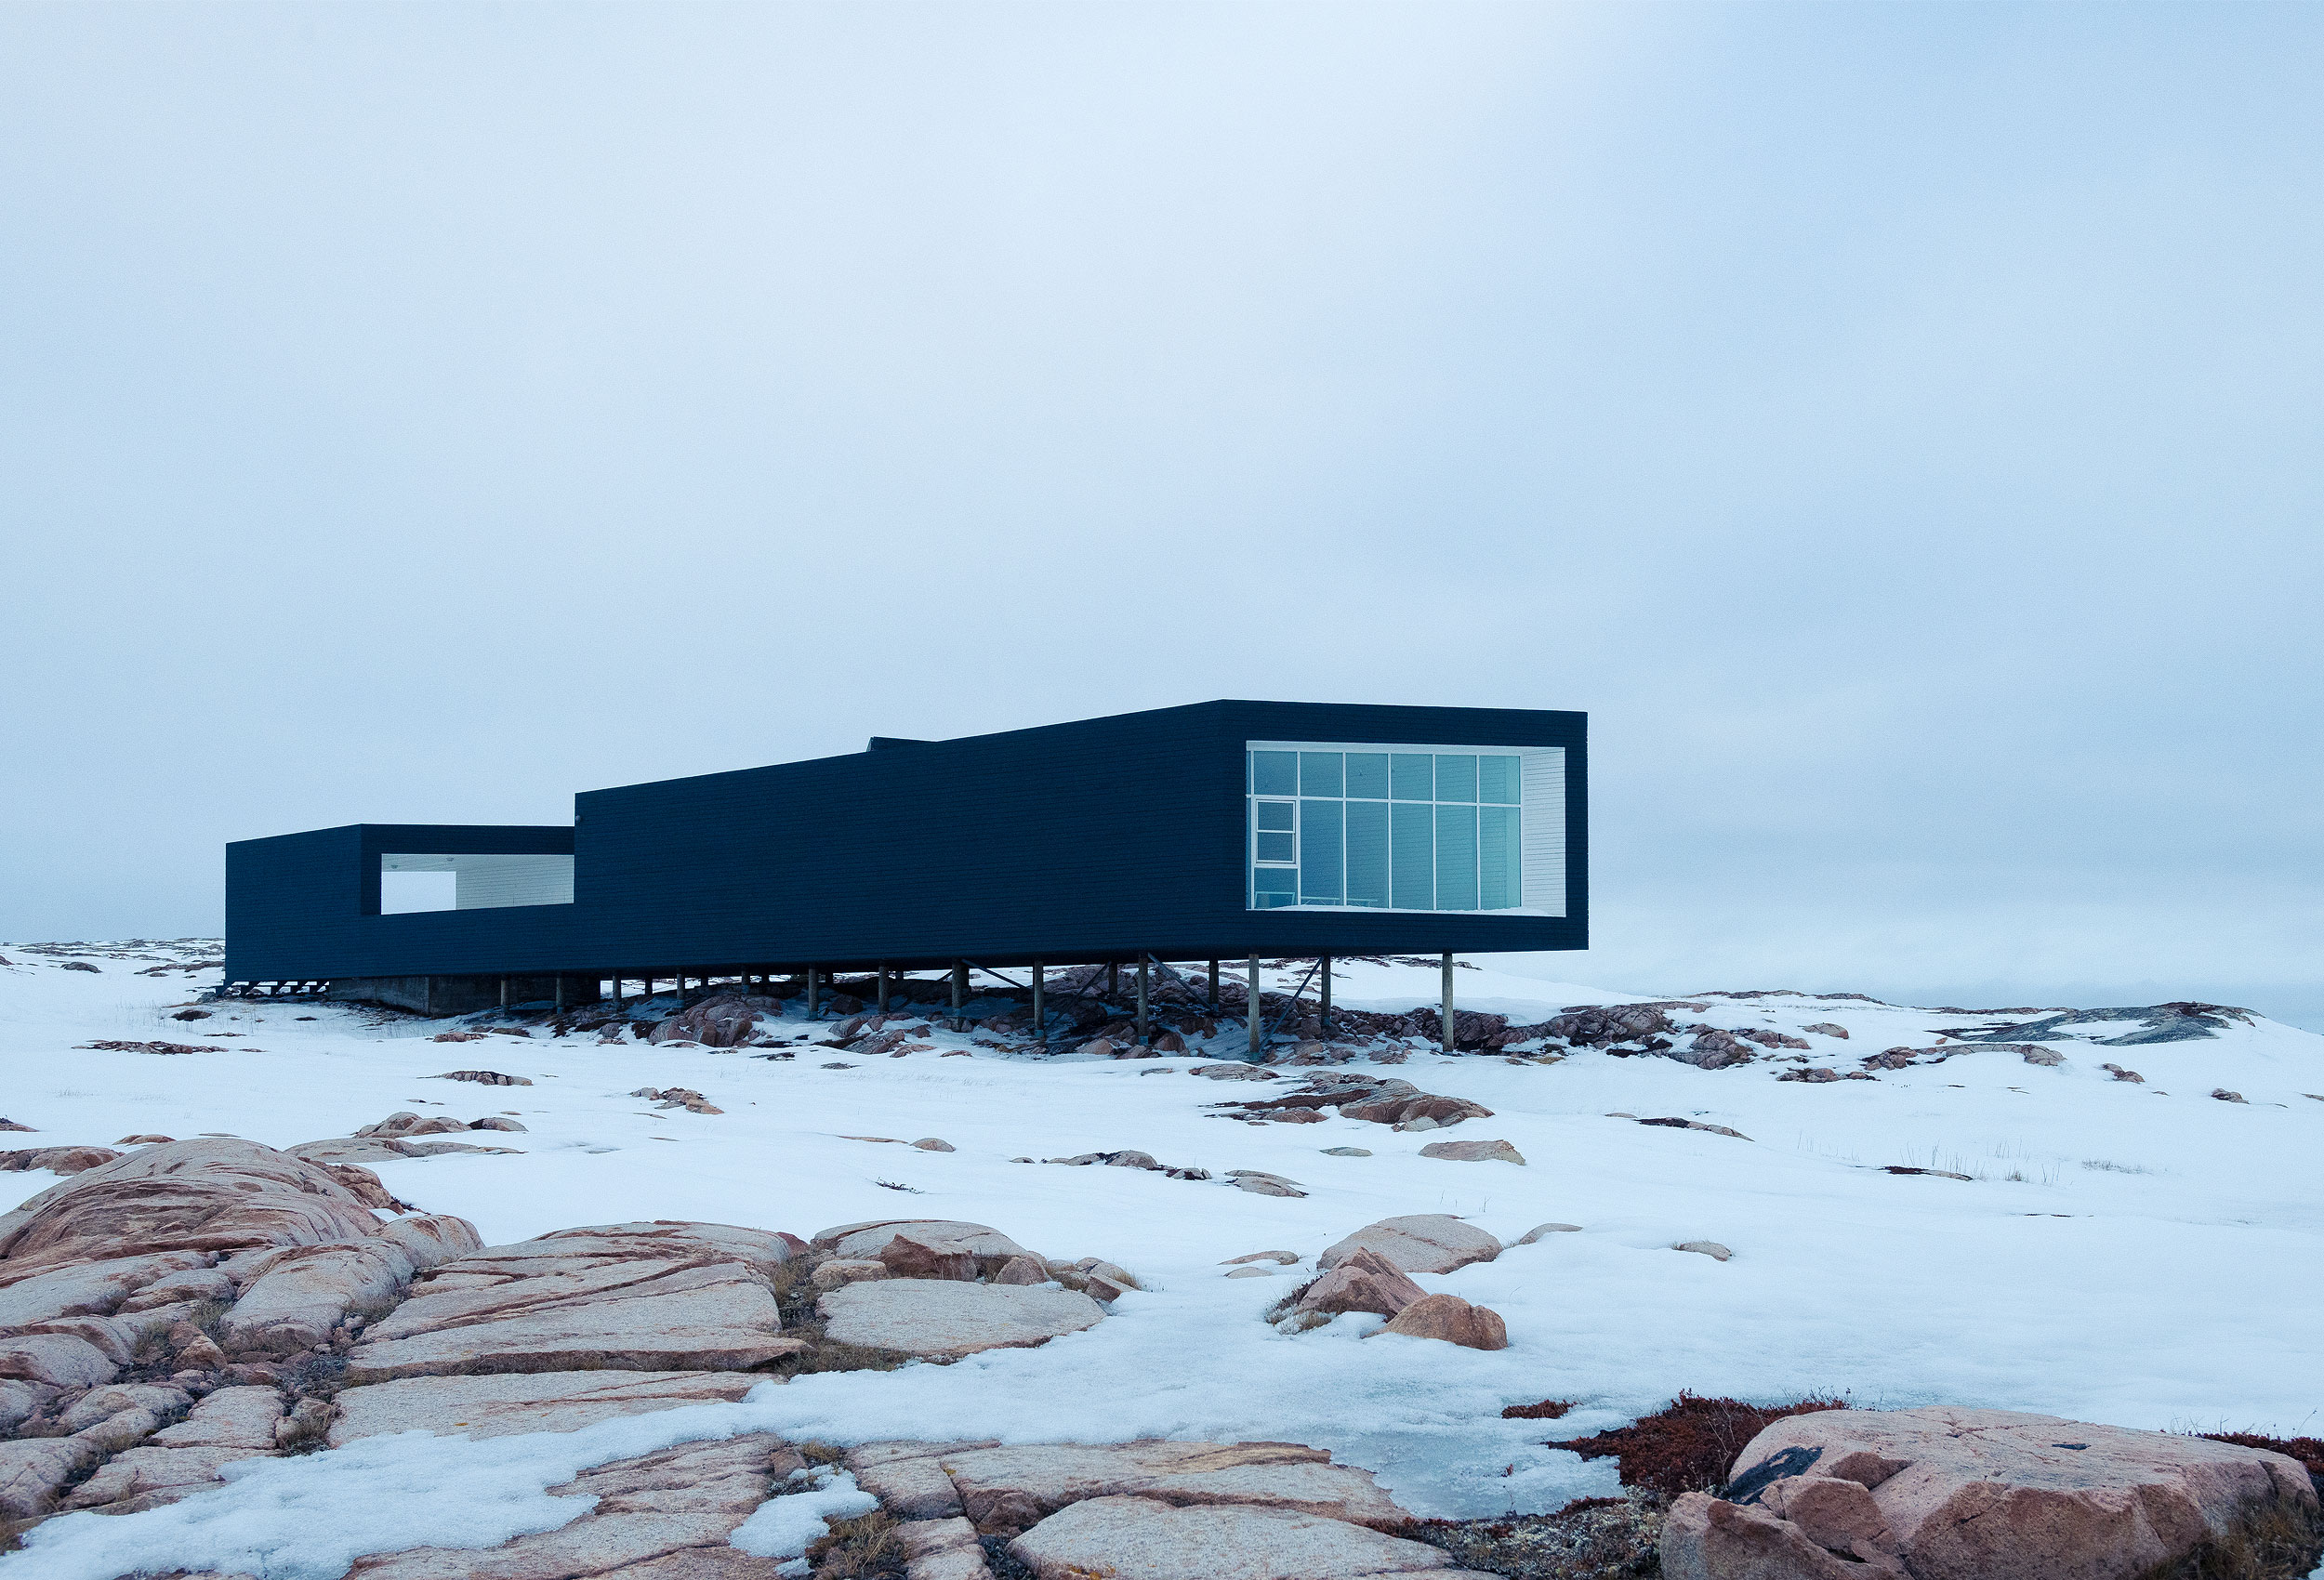 Long studio by architectural photographer Kristopher Grunert